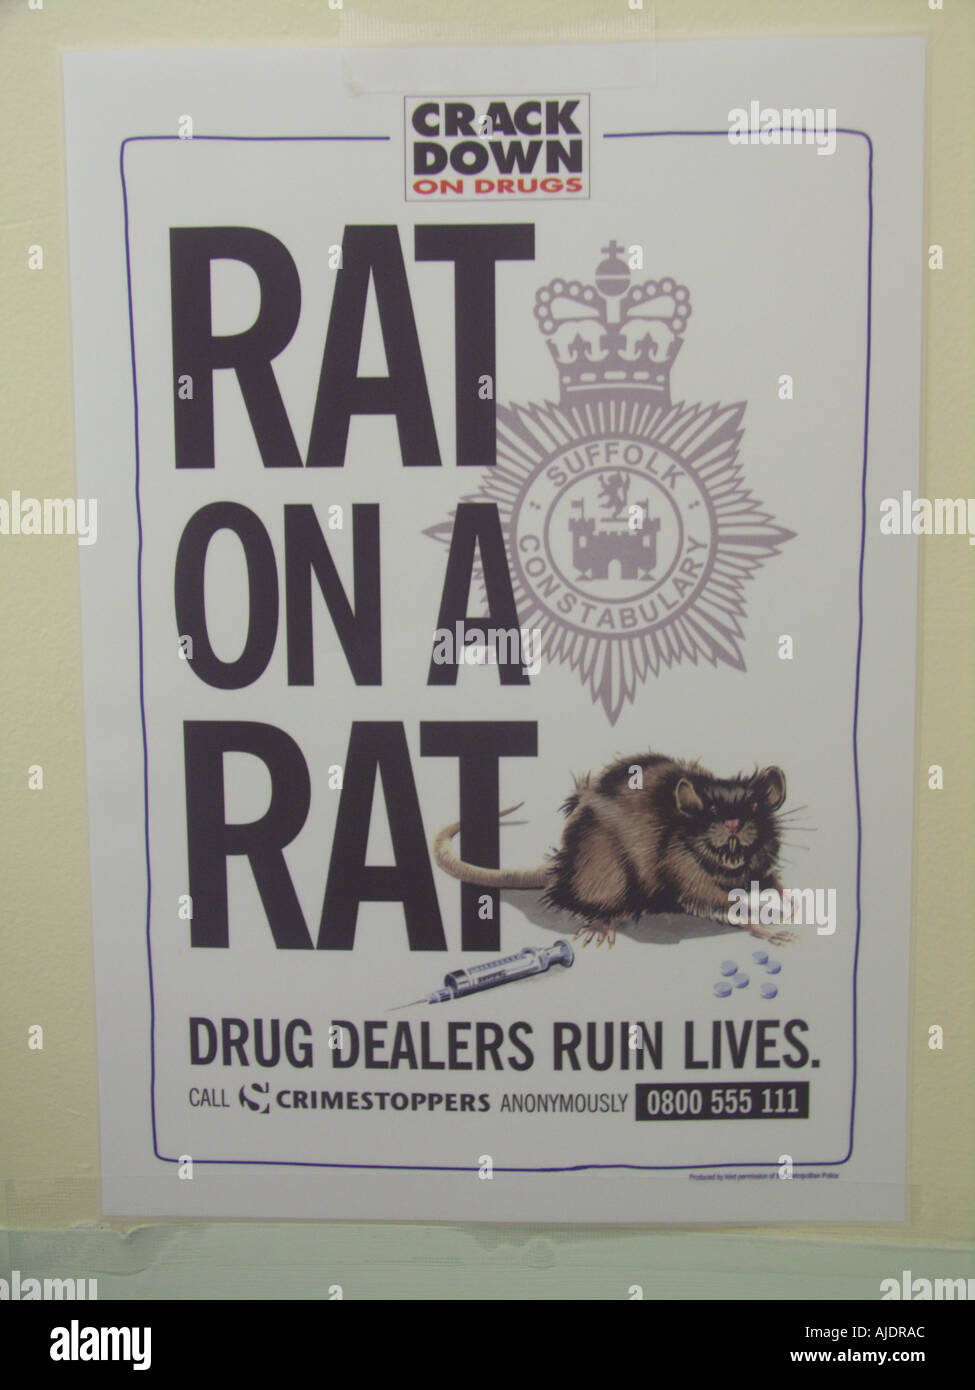 Rat on a rat anti drug poster Stock Photo